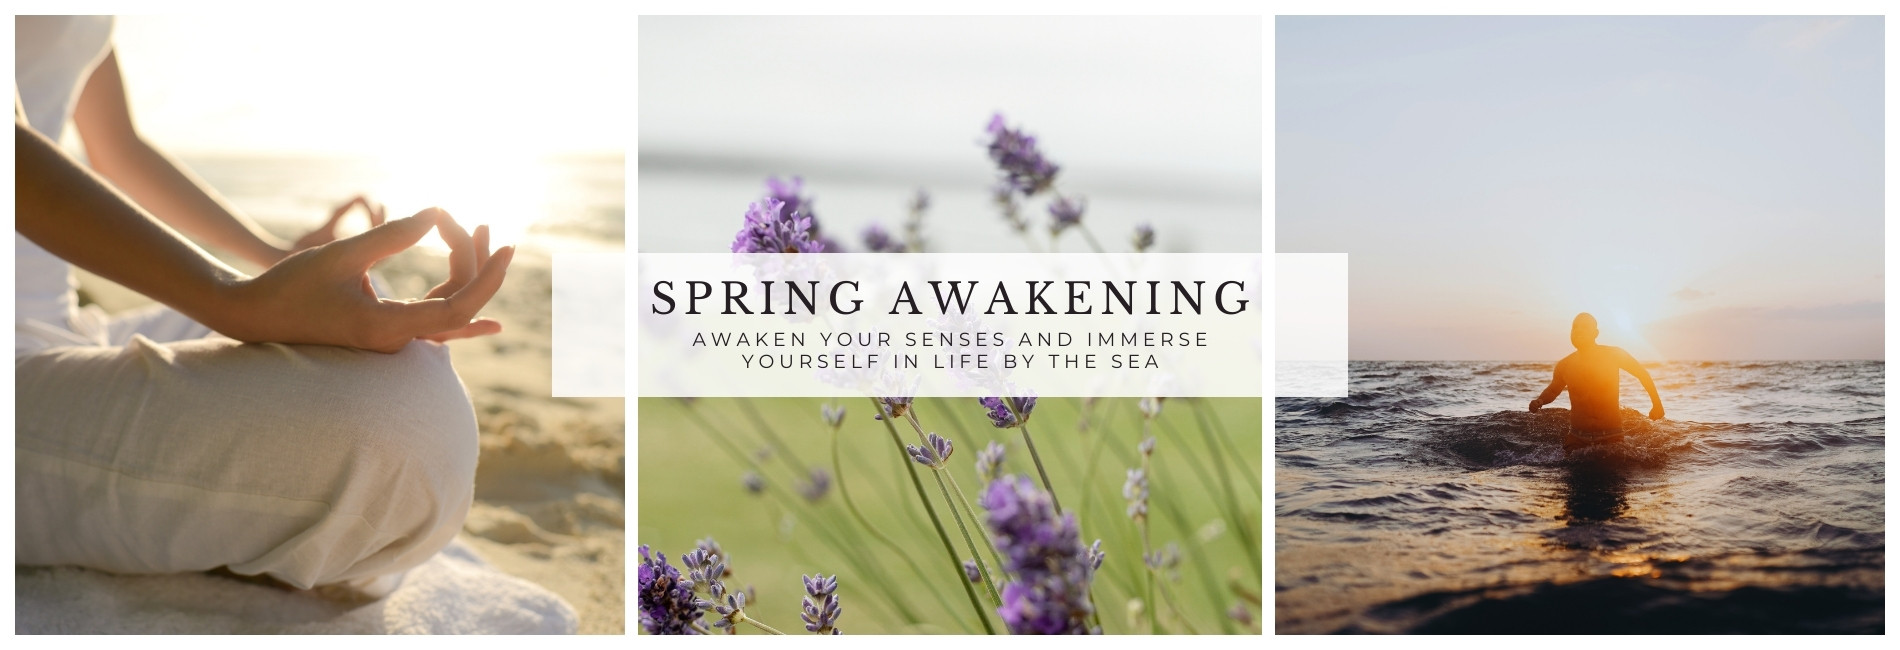 Spring awakening banner xpx www.armadahotel.com_v2